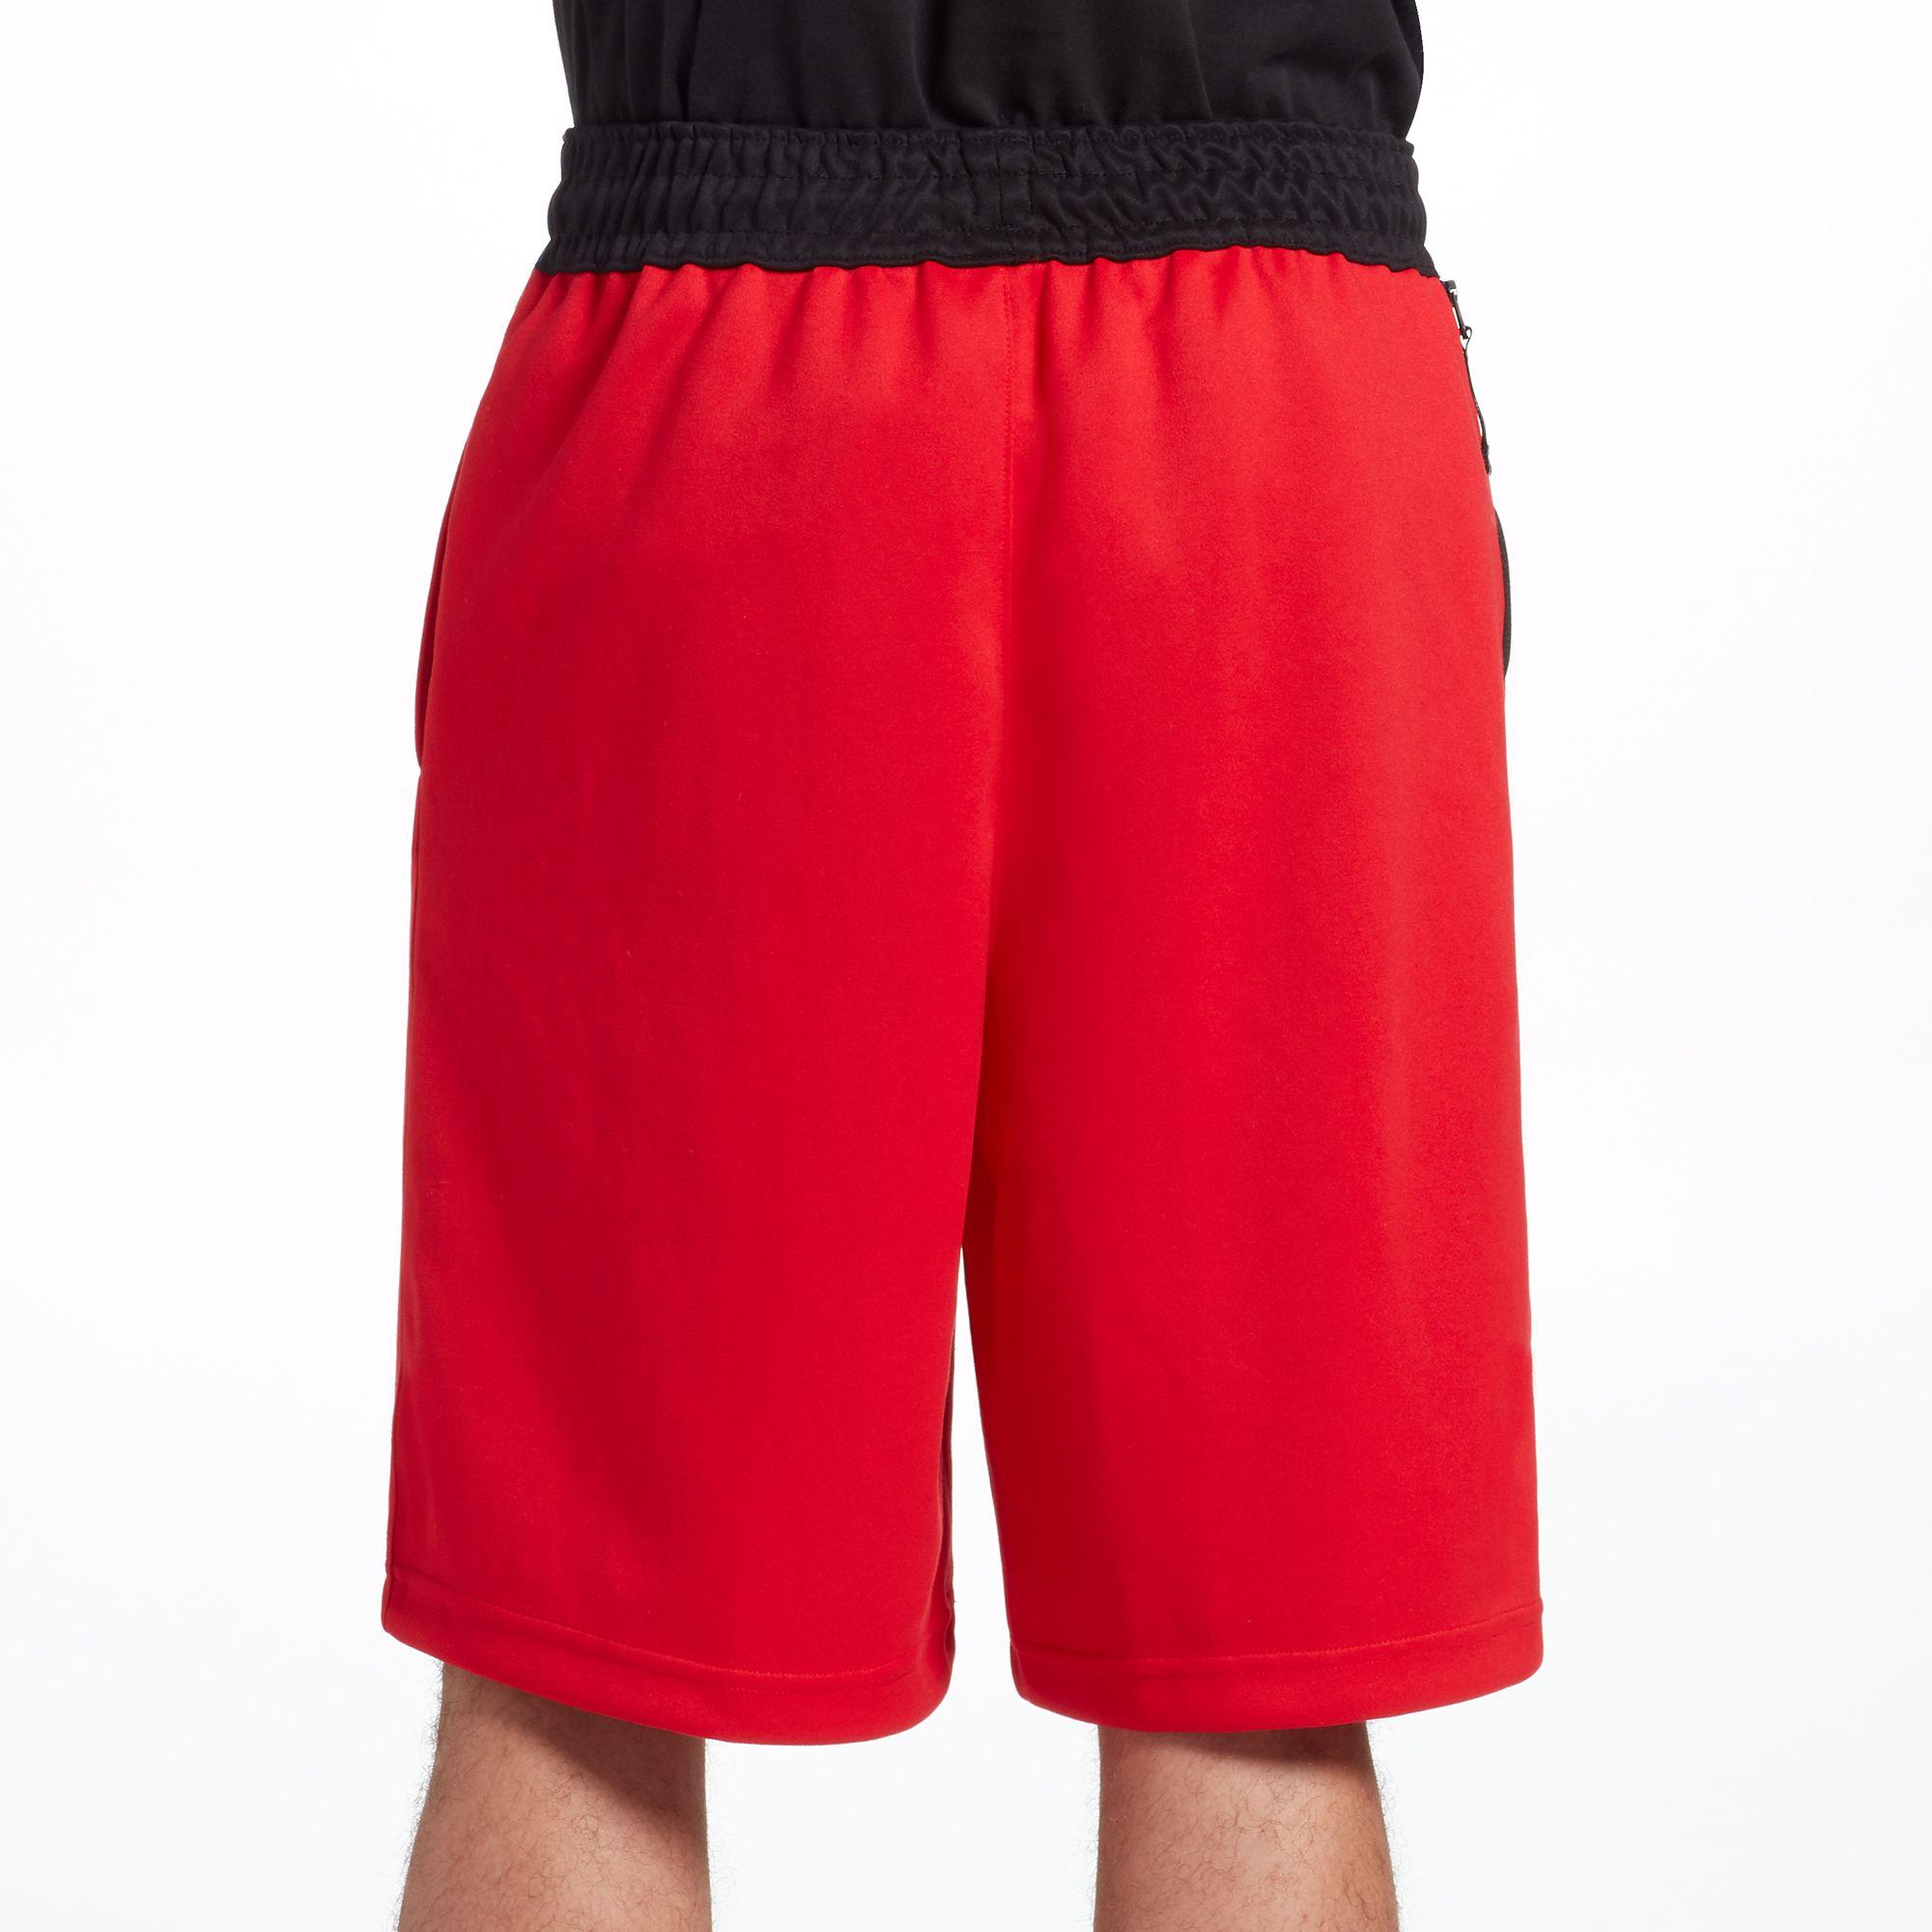 Nike Dri-fit Spotlight Shorts in University/Red/Black (Red) for Men - Lyst